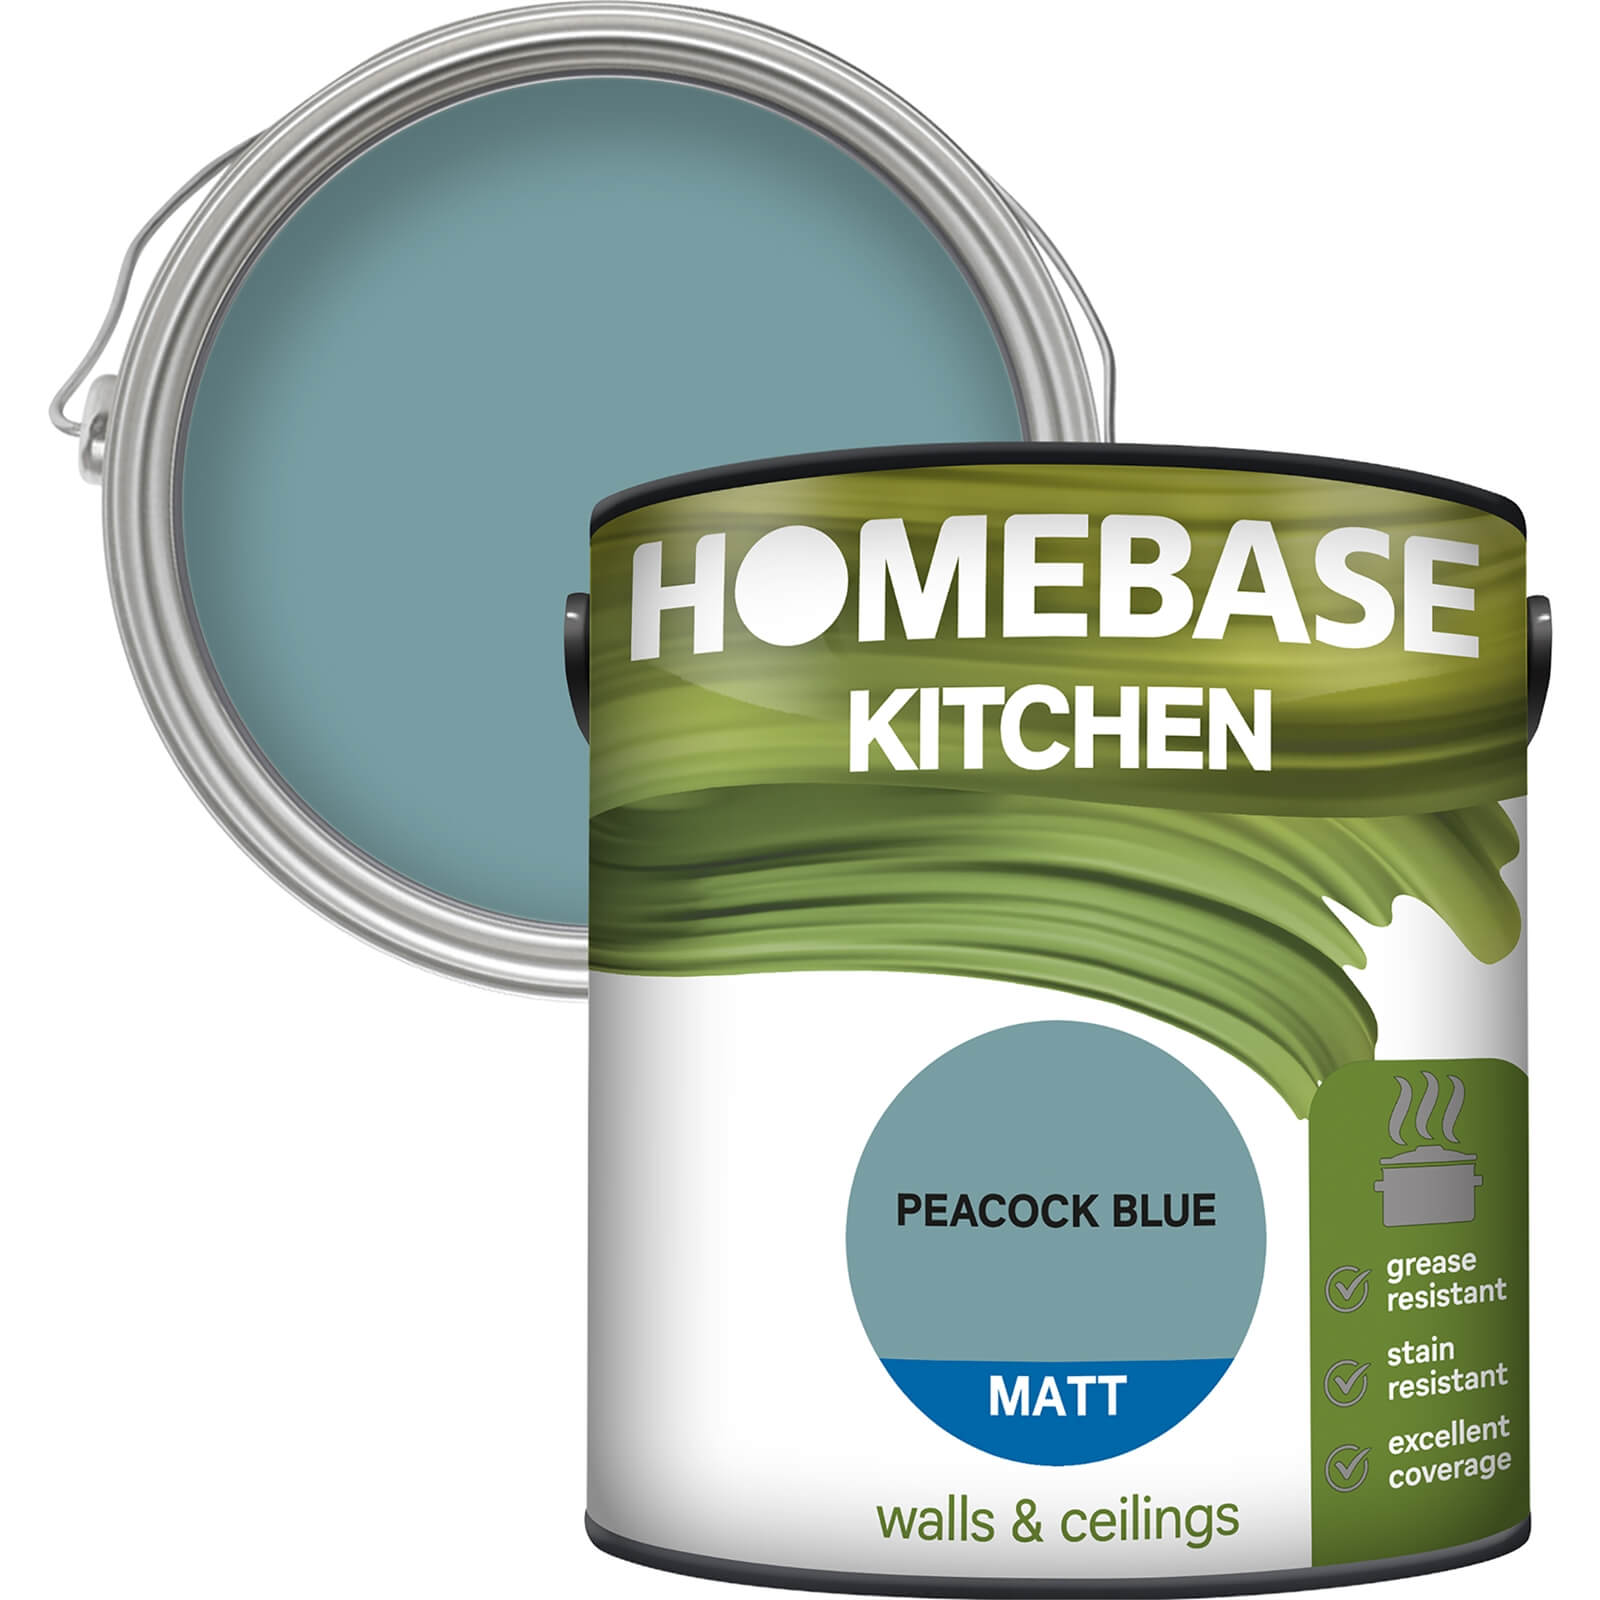 Photo of Homebase Kitchen Matt Paint - Peacock Blue 2.5l